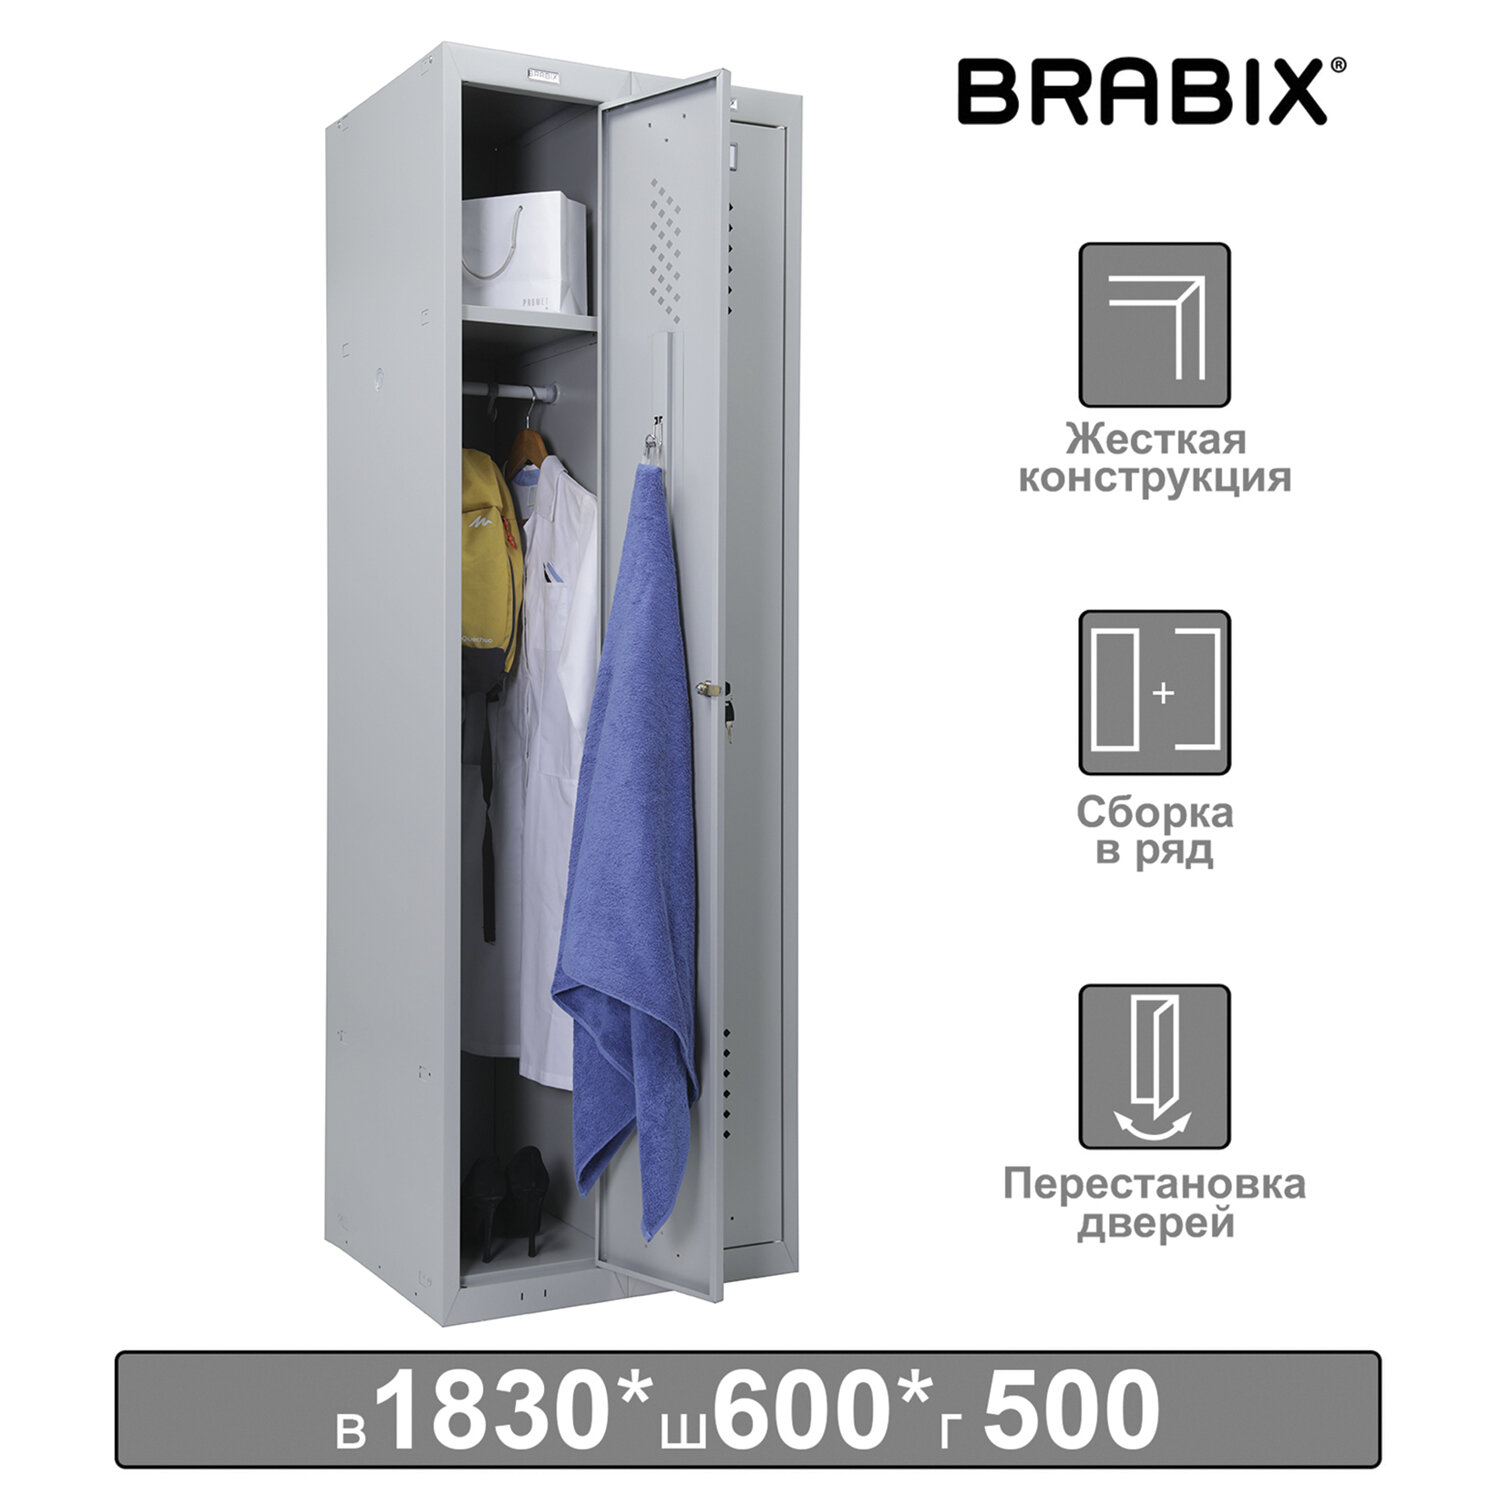 Brabix Шкаф металлический для одежды BRABIX LK 21-60, УСИЛЕННЫЙ, 2 секции, 1830х600х500 мм, 32 кг, 291126, S230BR402502